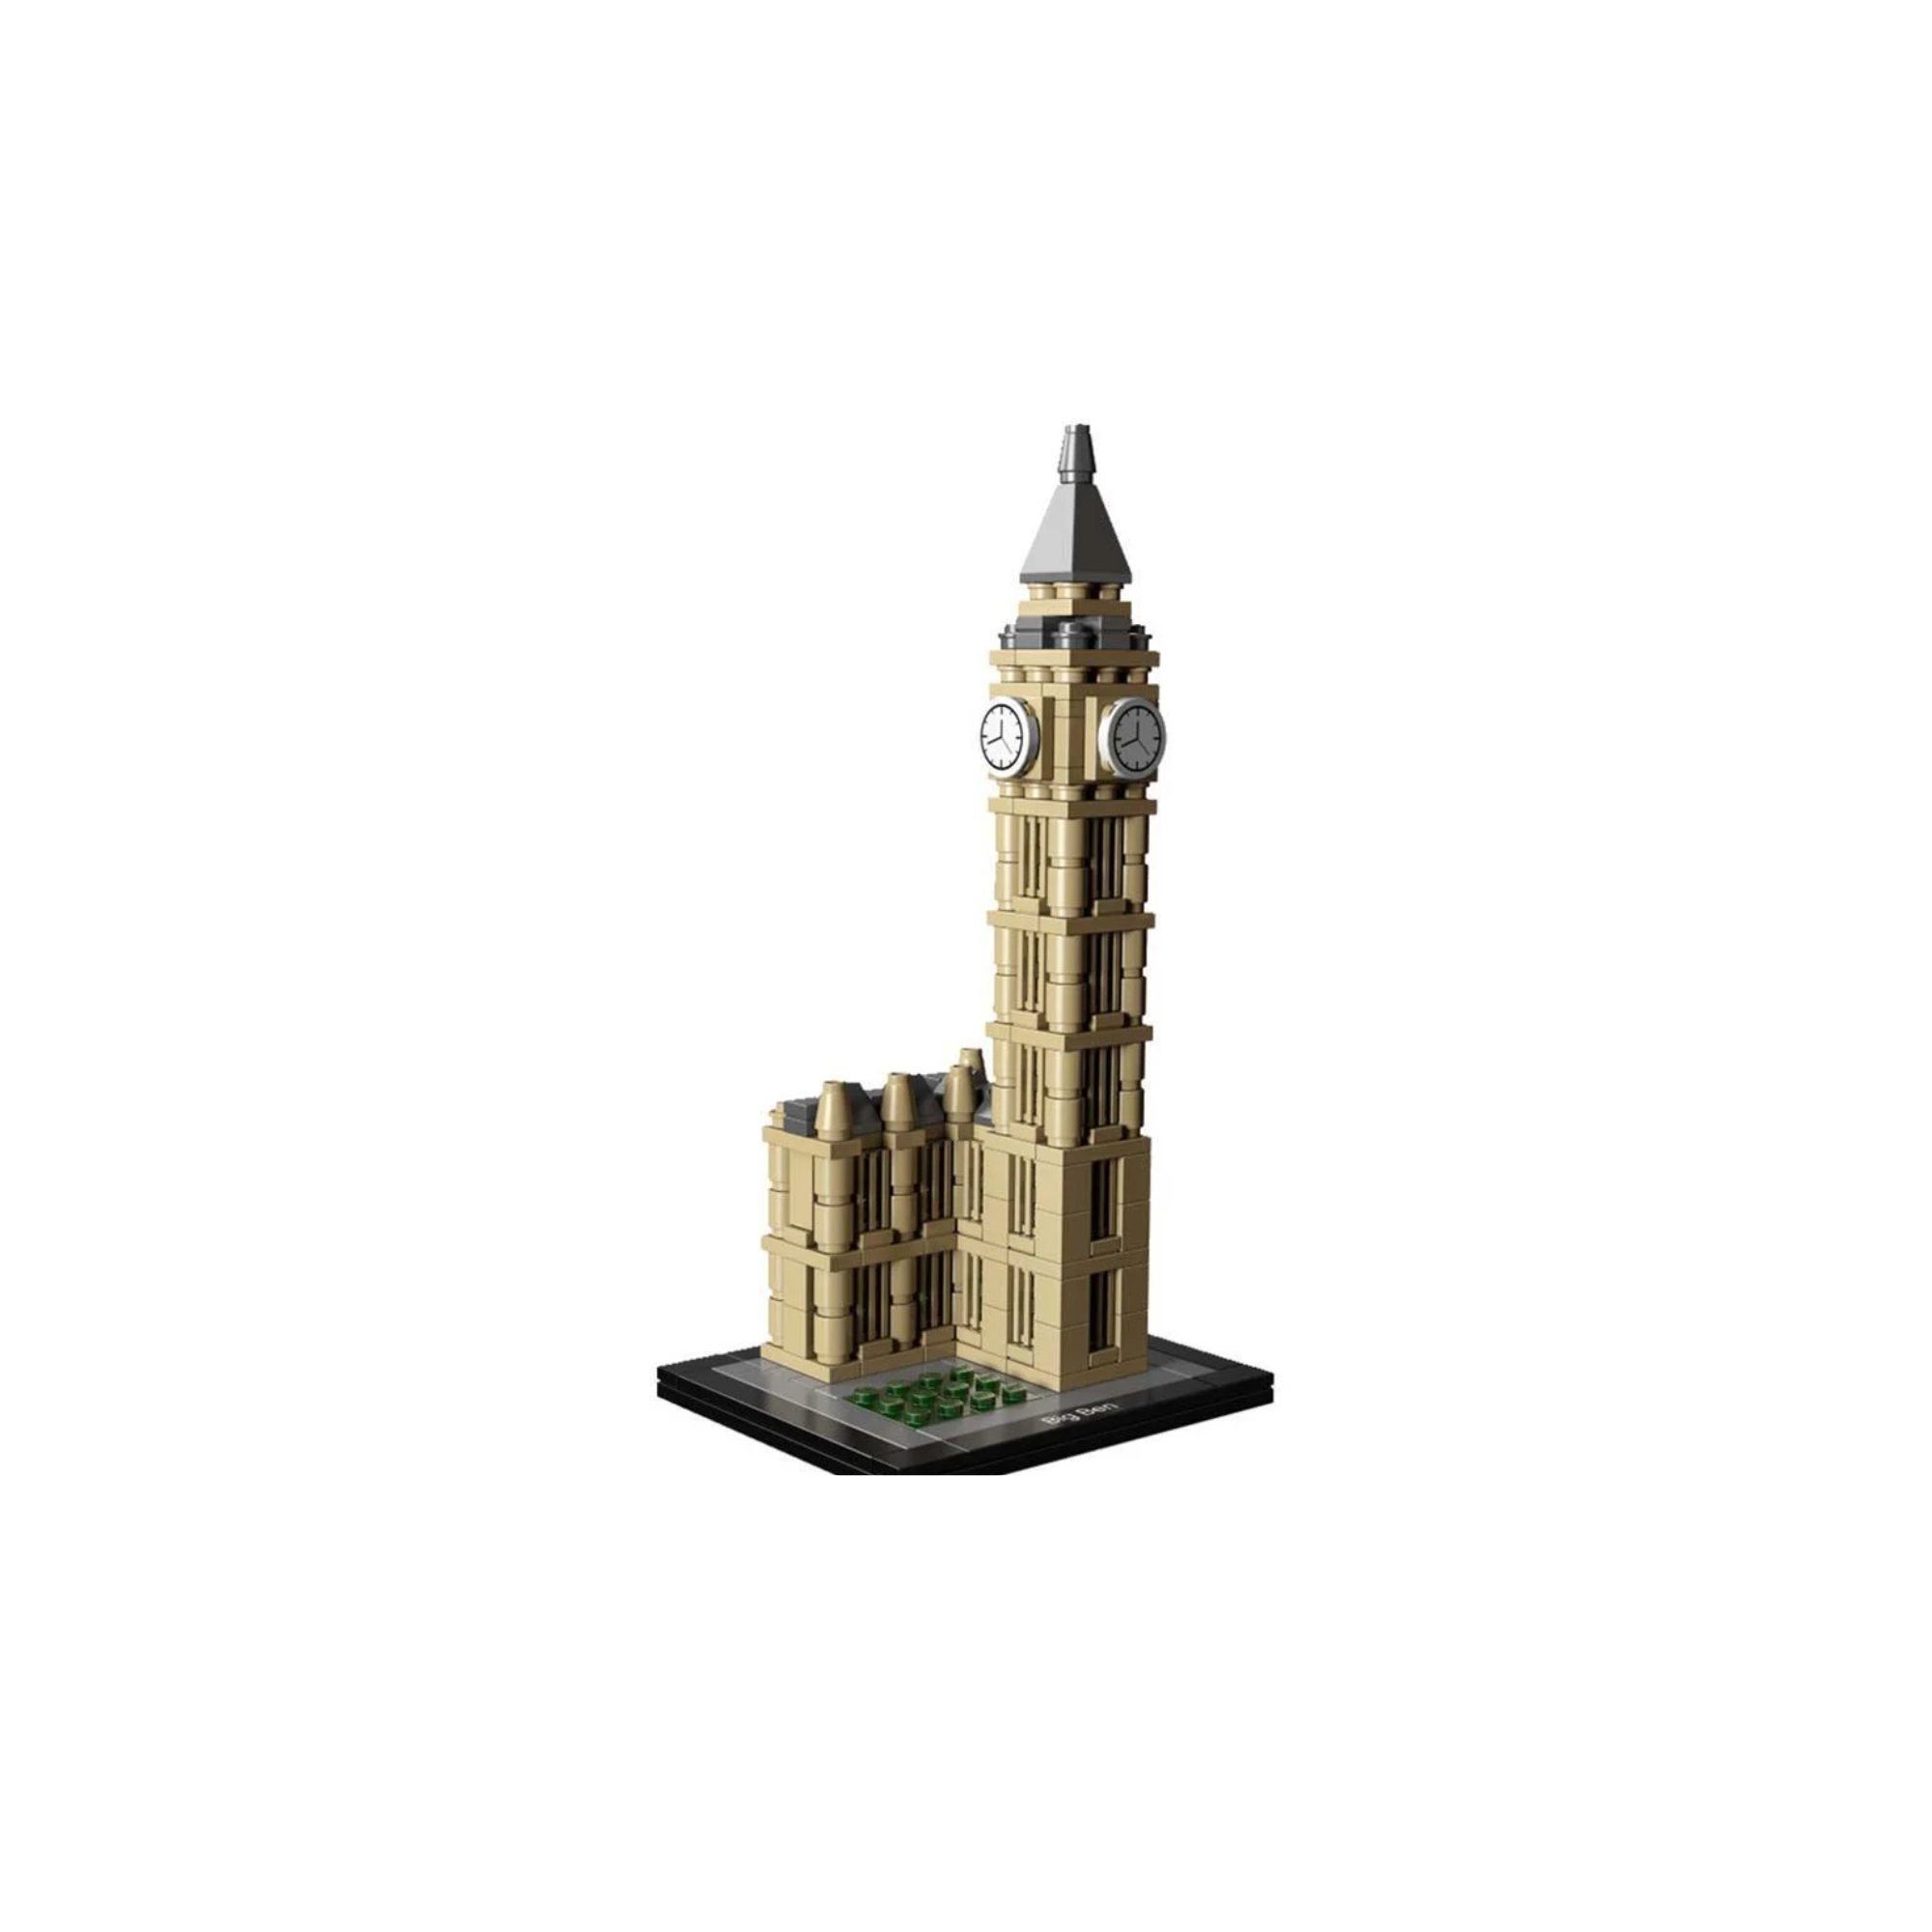 LEGO Architecture Big Ben